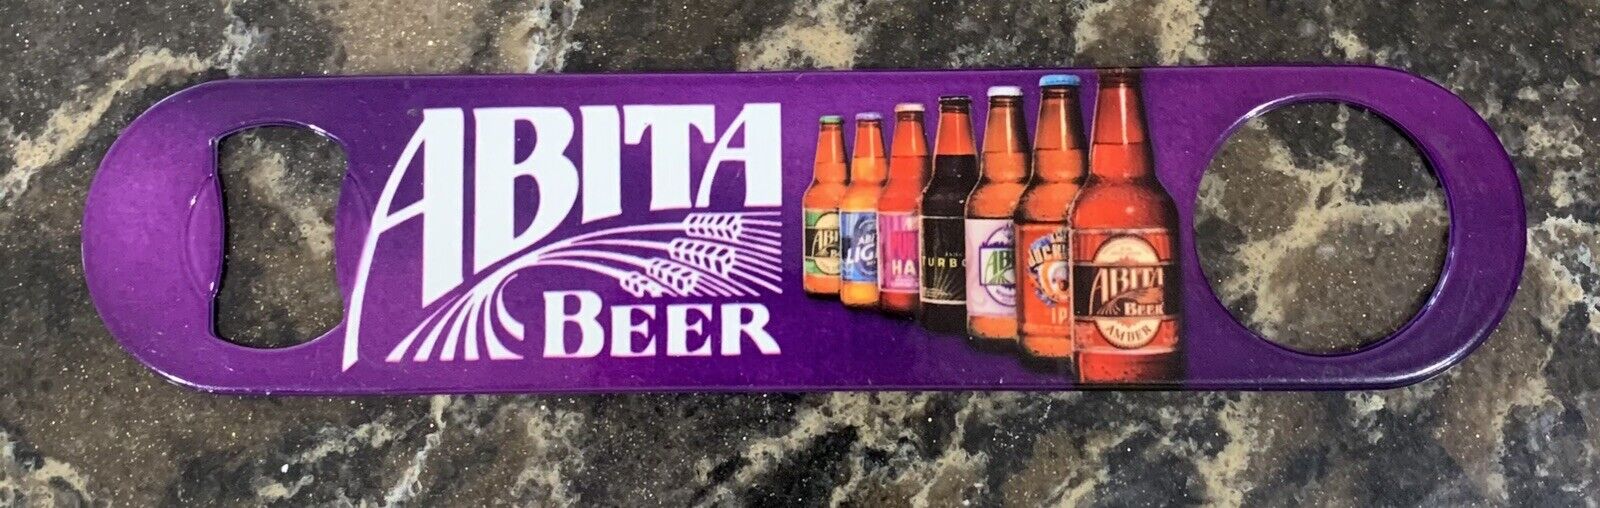 Beer Key * Flat Key * Abita Beer Brewing Company Bottle Opener VGC HTF